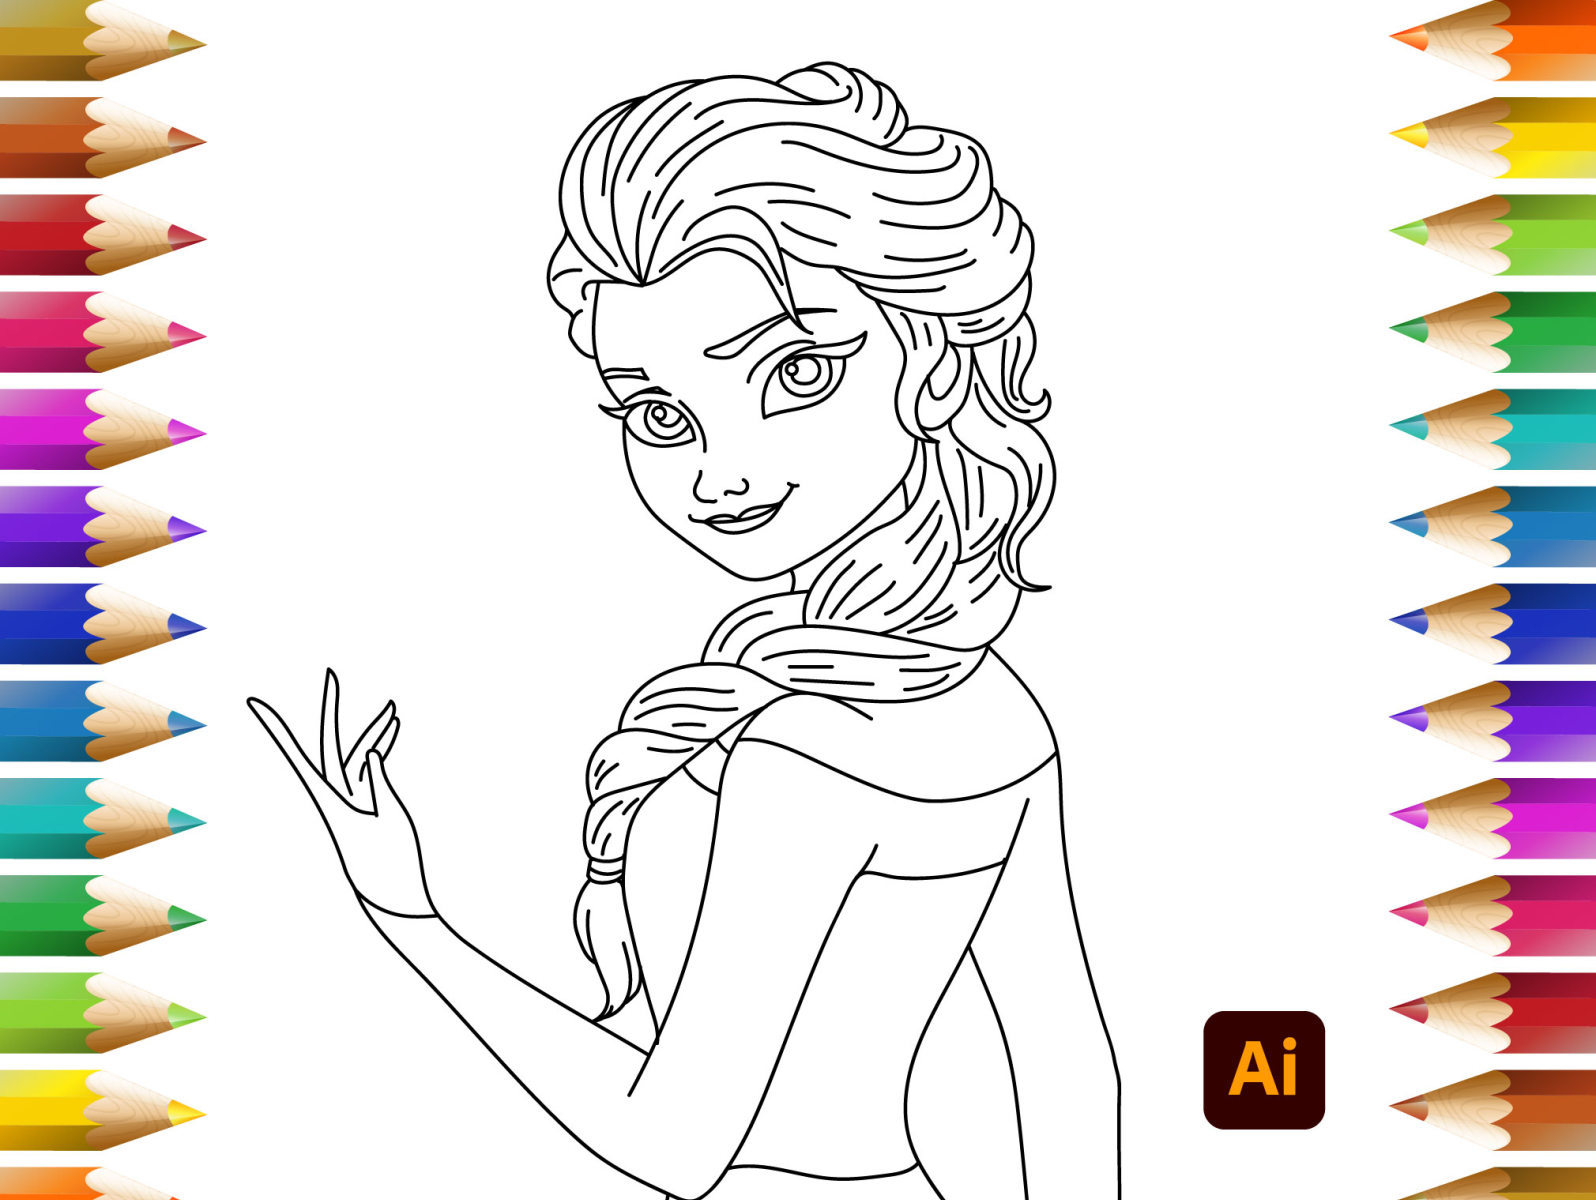 Disney Princess Elsa line drawing by Tharaka Liyanagunawardhane on Dribbble